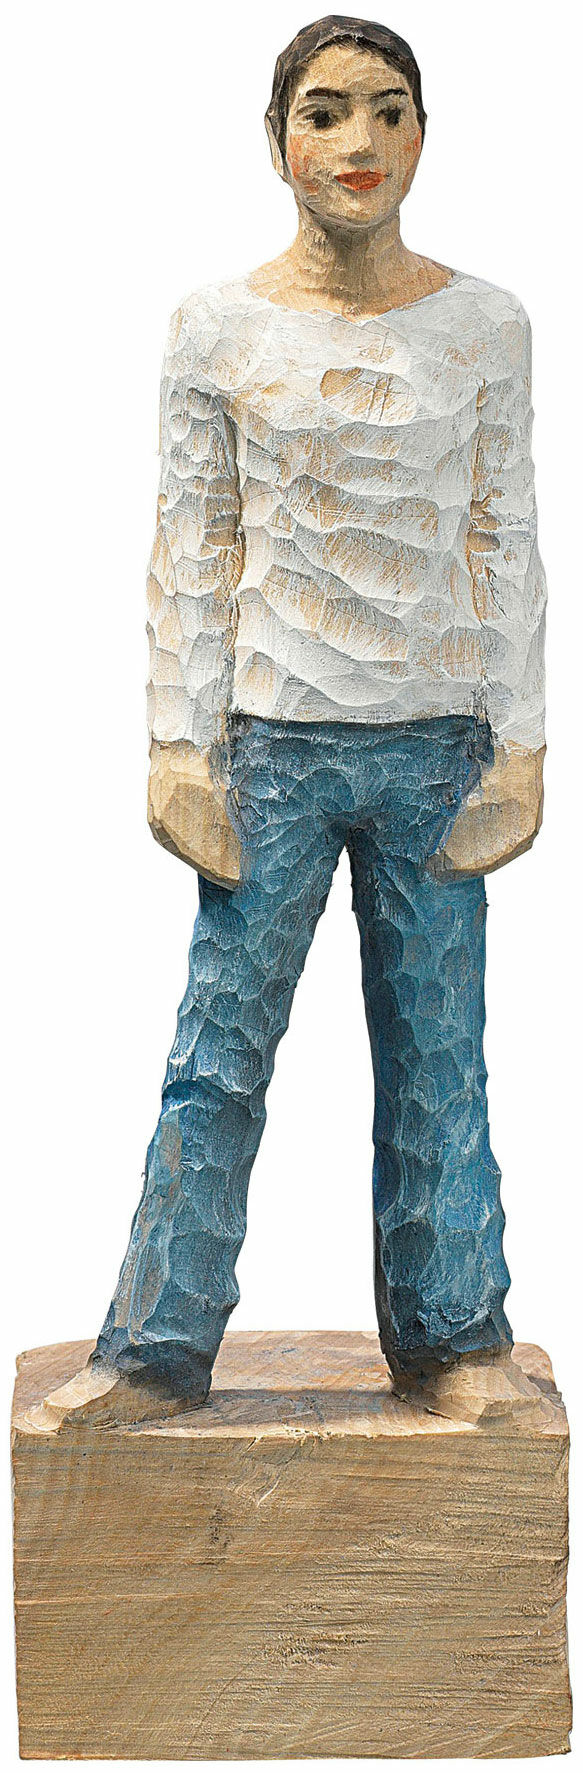 Skulptur "Mand", støbt træfinish von Michael Pickl